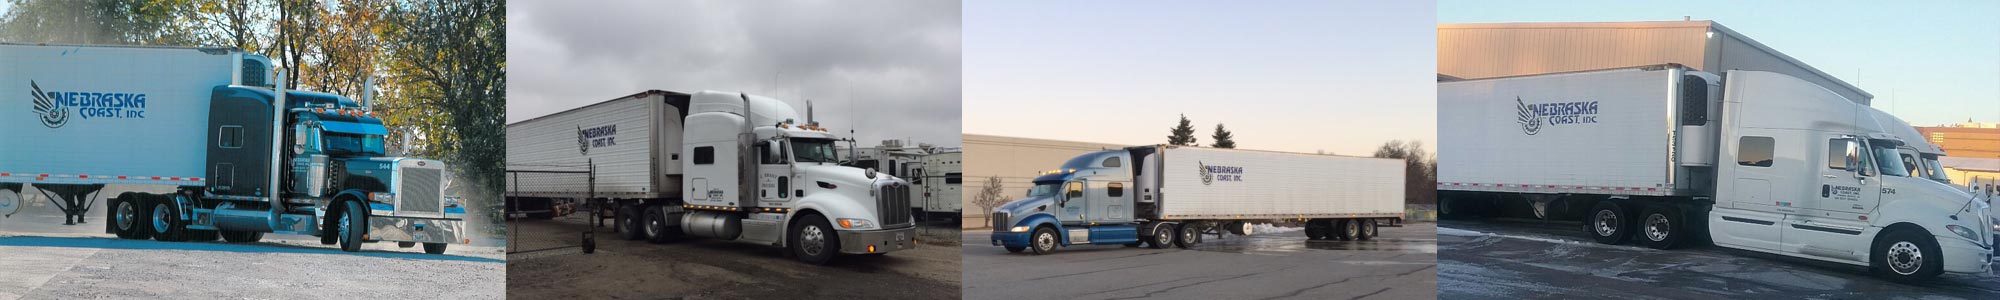 Trucking Company in Council Bluffs, IA | Nebraska Coast, Inc.